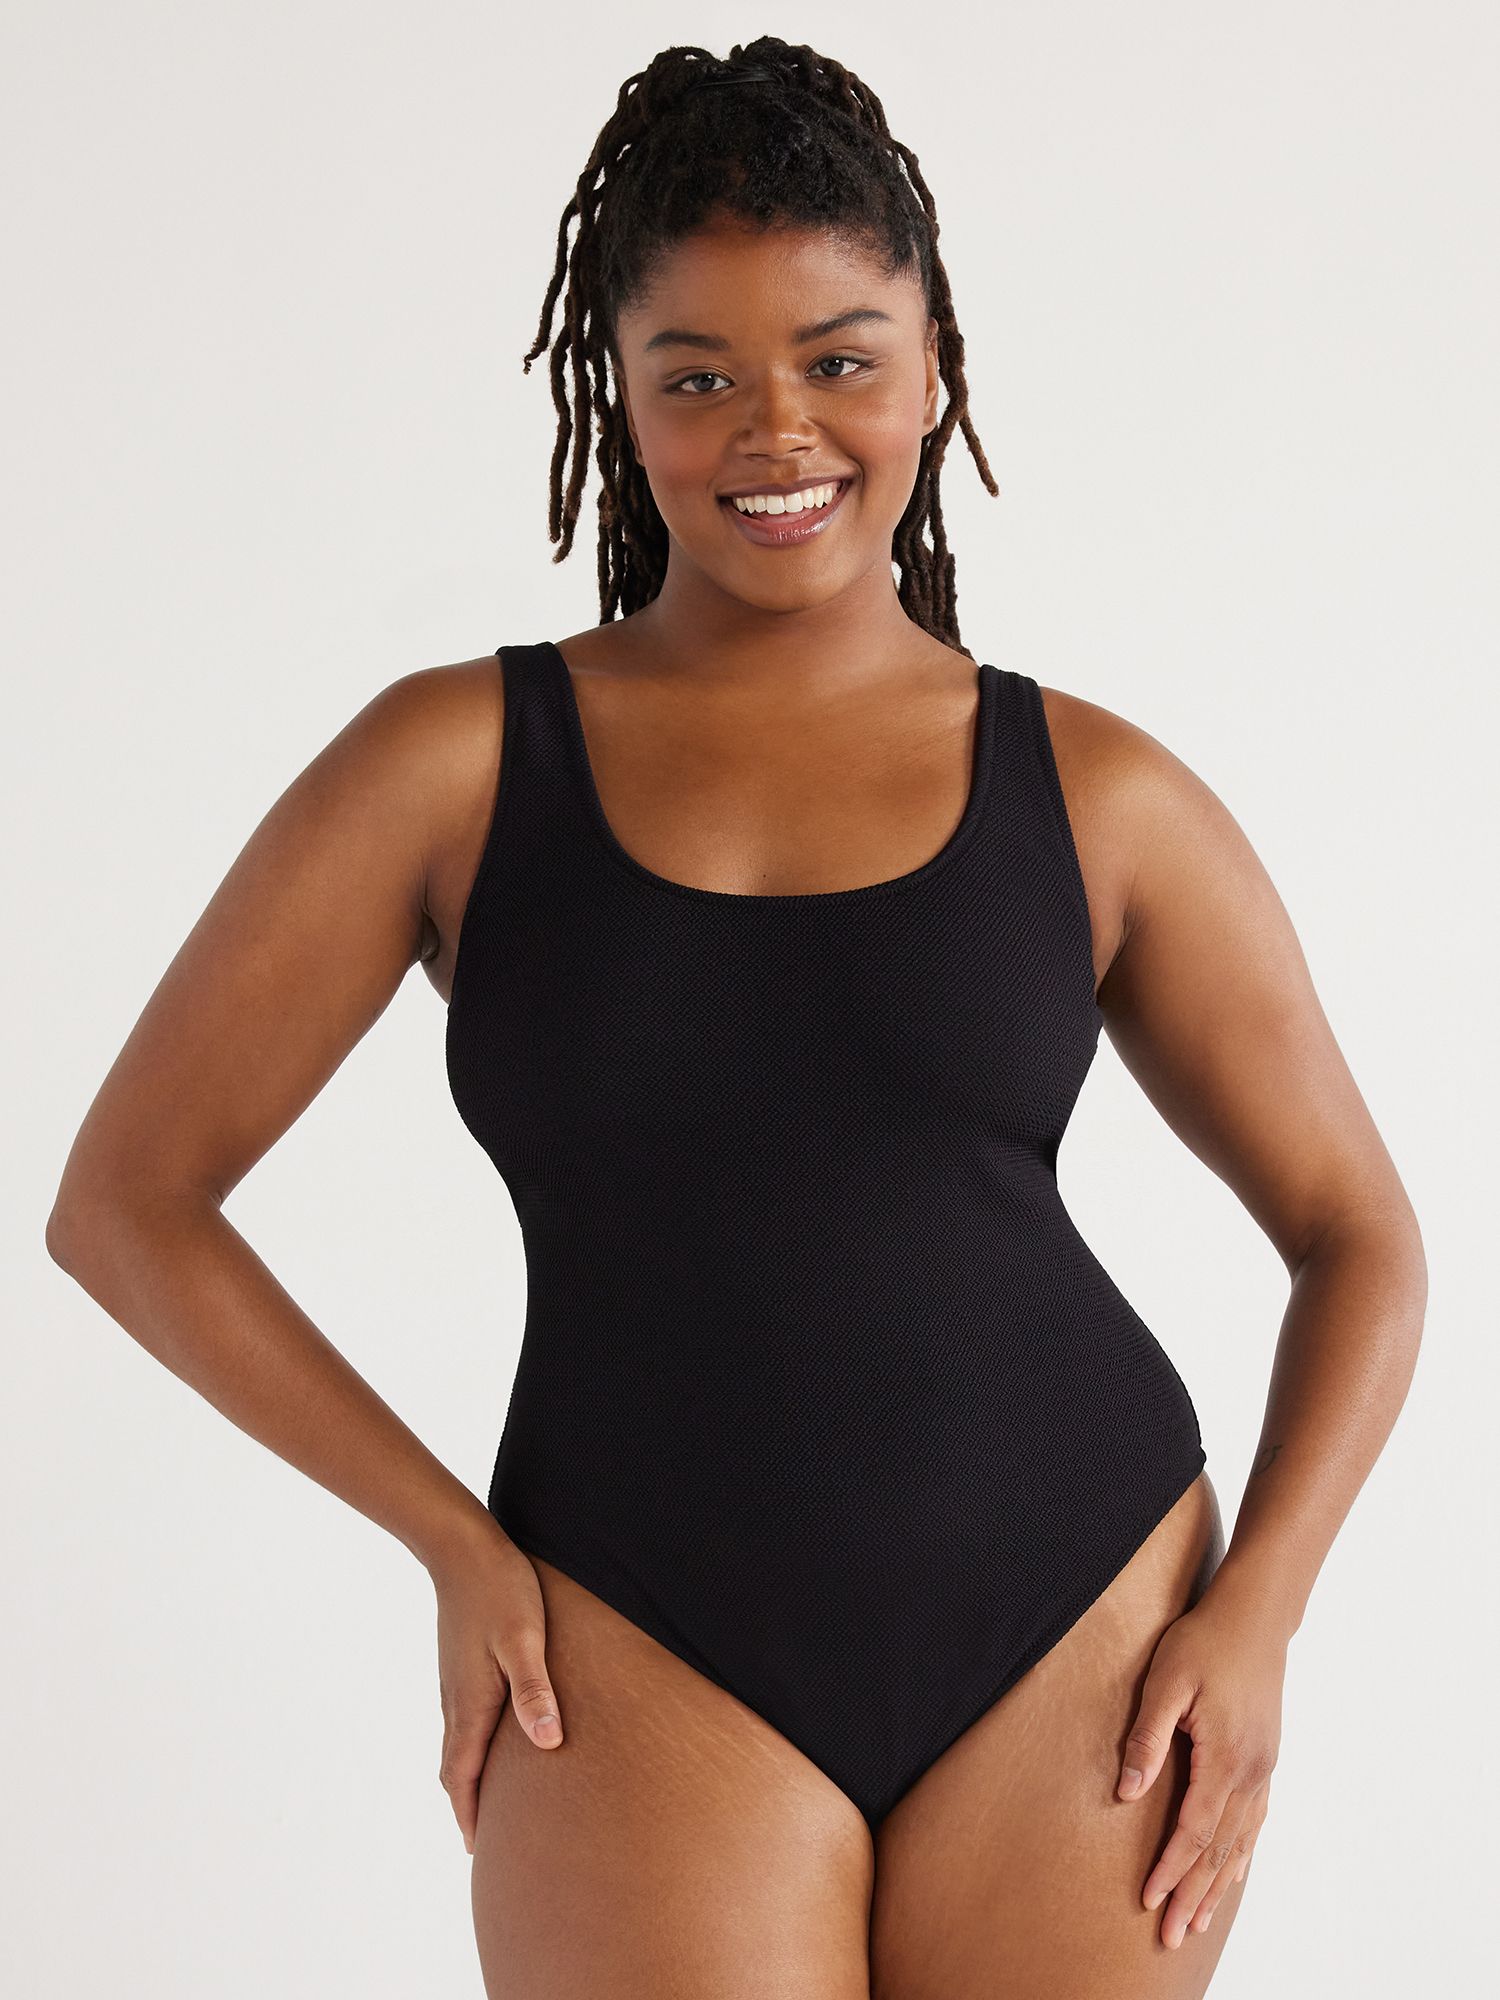 Love & Sports Women's Scrunchy Scooped Back Tank One-Piece Swimsuit, Pink, Sizes XS-XXL | Walmart (US)